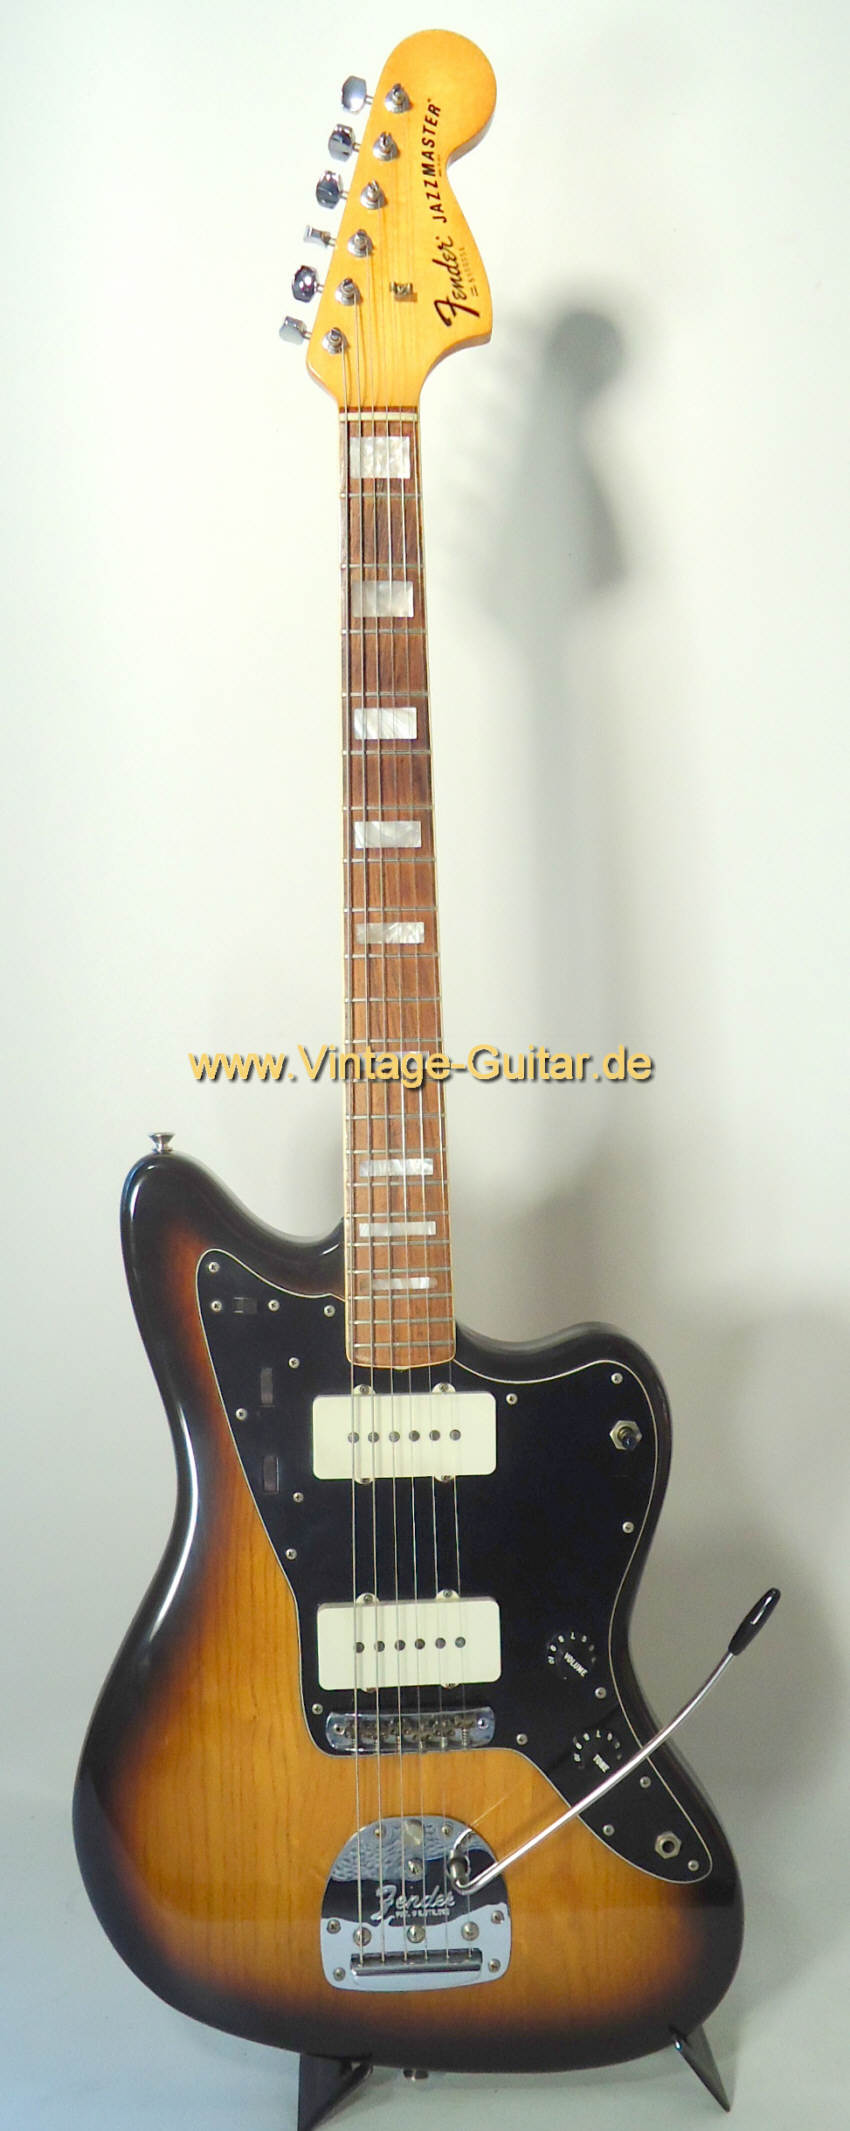 Fender-Jazzmaster-1977-sunburst-a.jpg